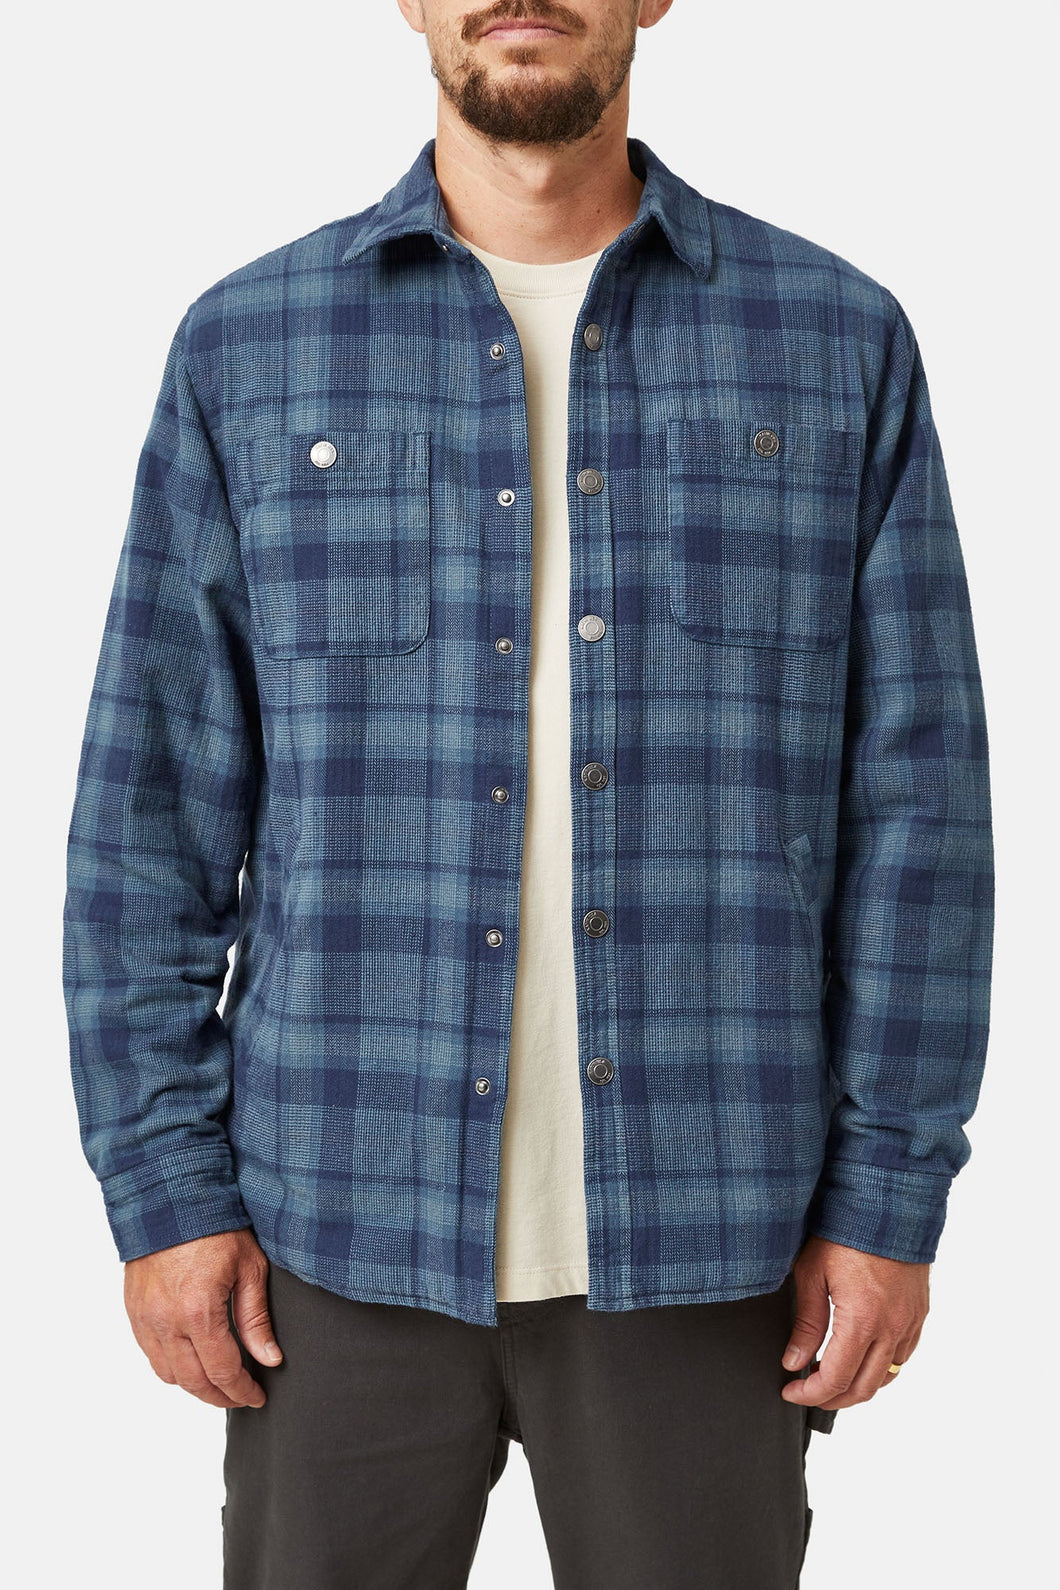 Katin Men's Harold Sherpa Lined Flannel Shirt/Jacket